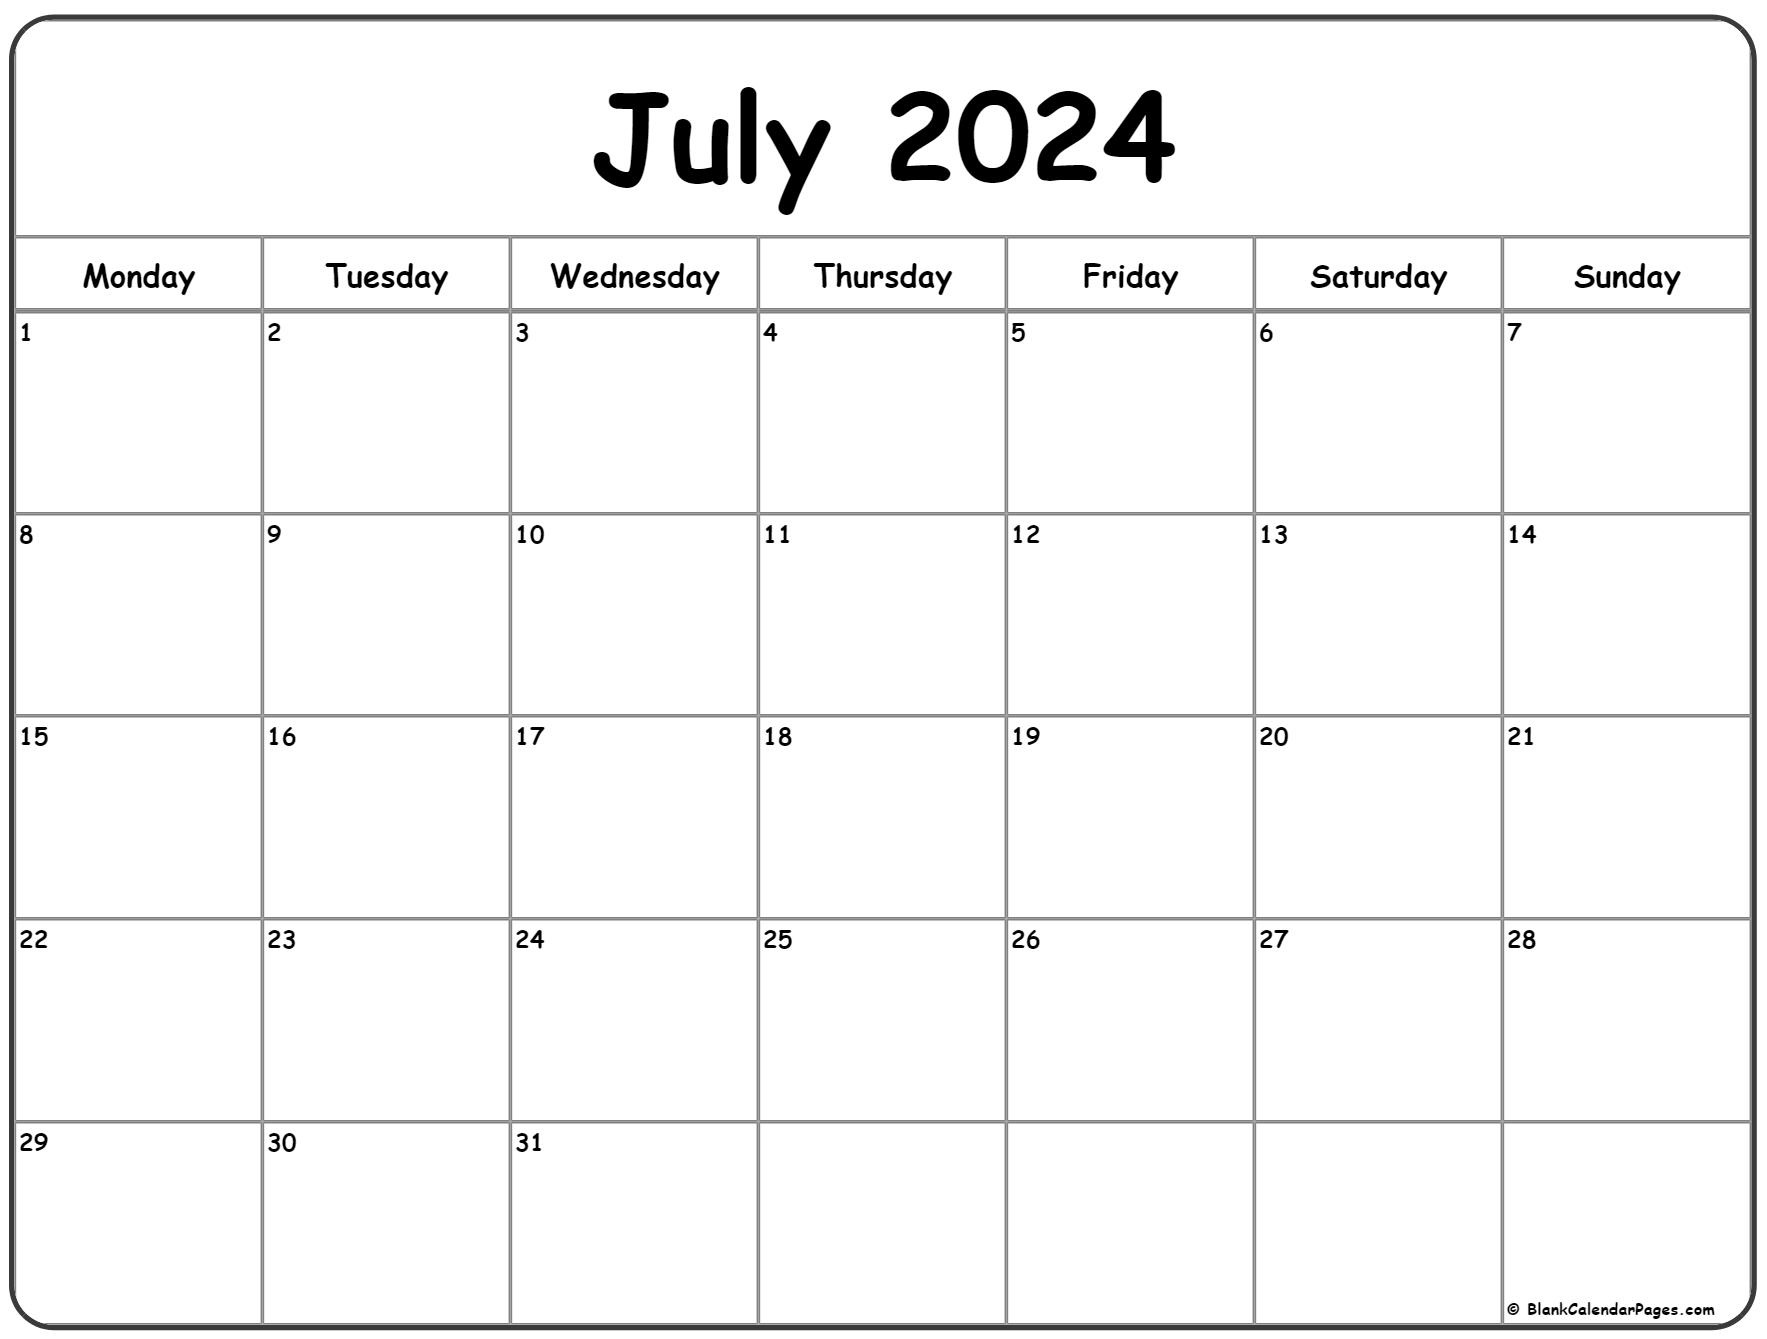 July 2024 Monday Calendar | Monday To Sunday throughout Blank July 2024 Calendar